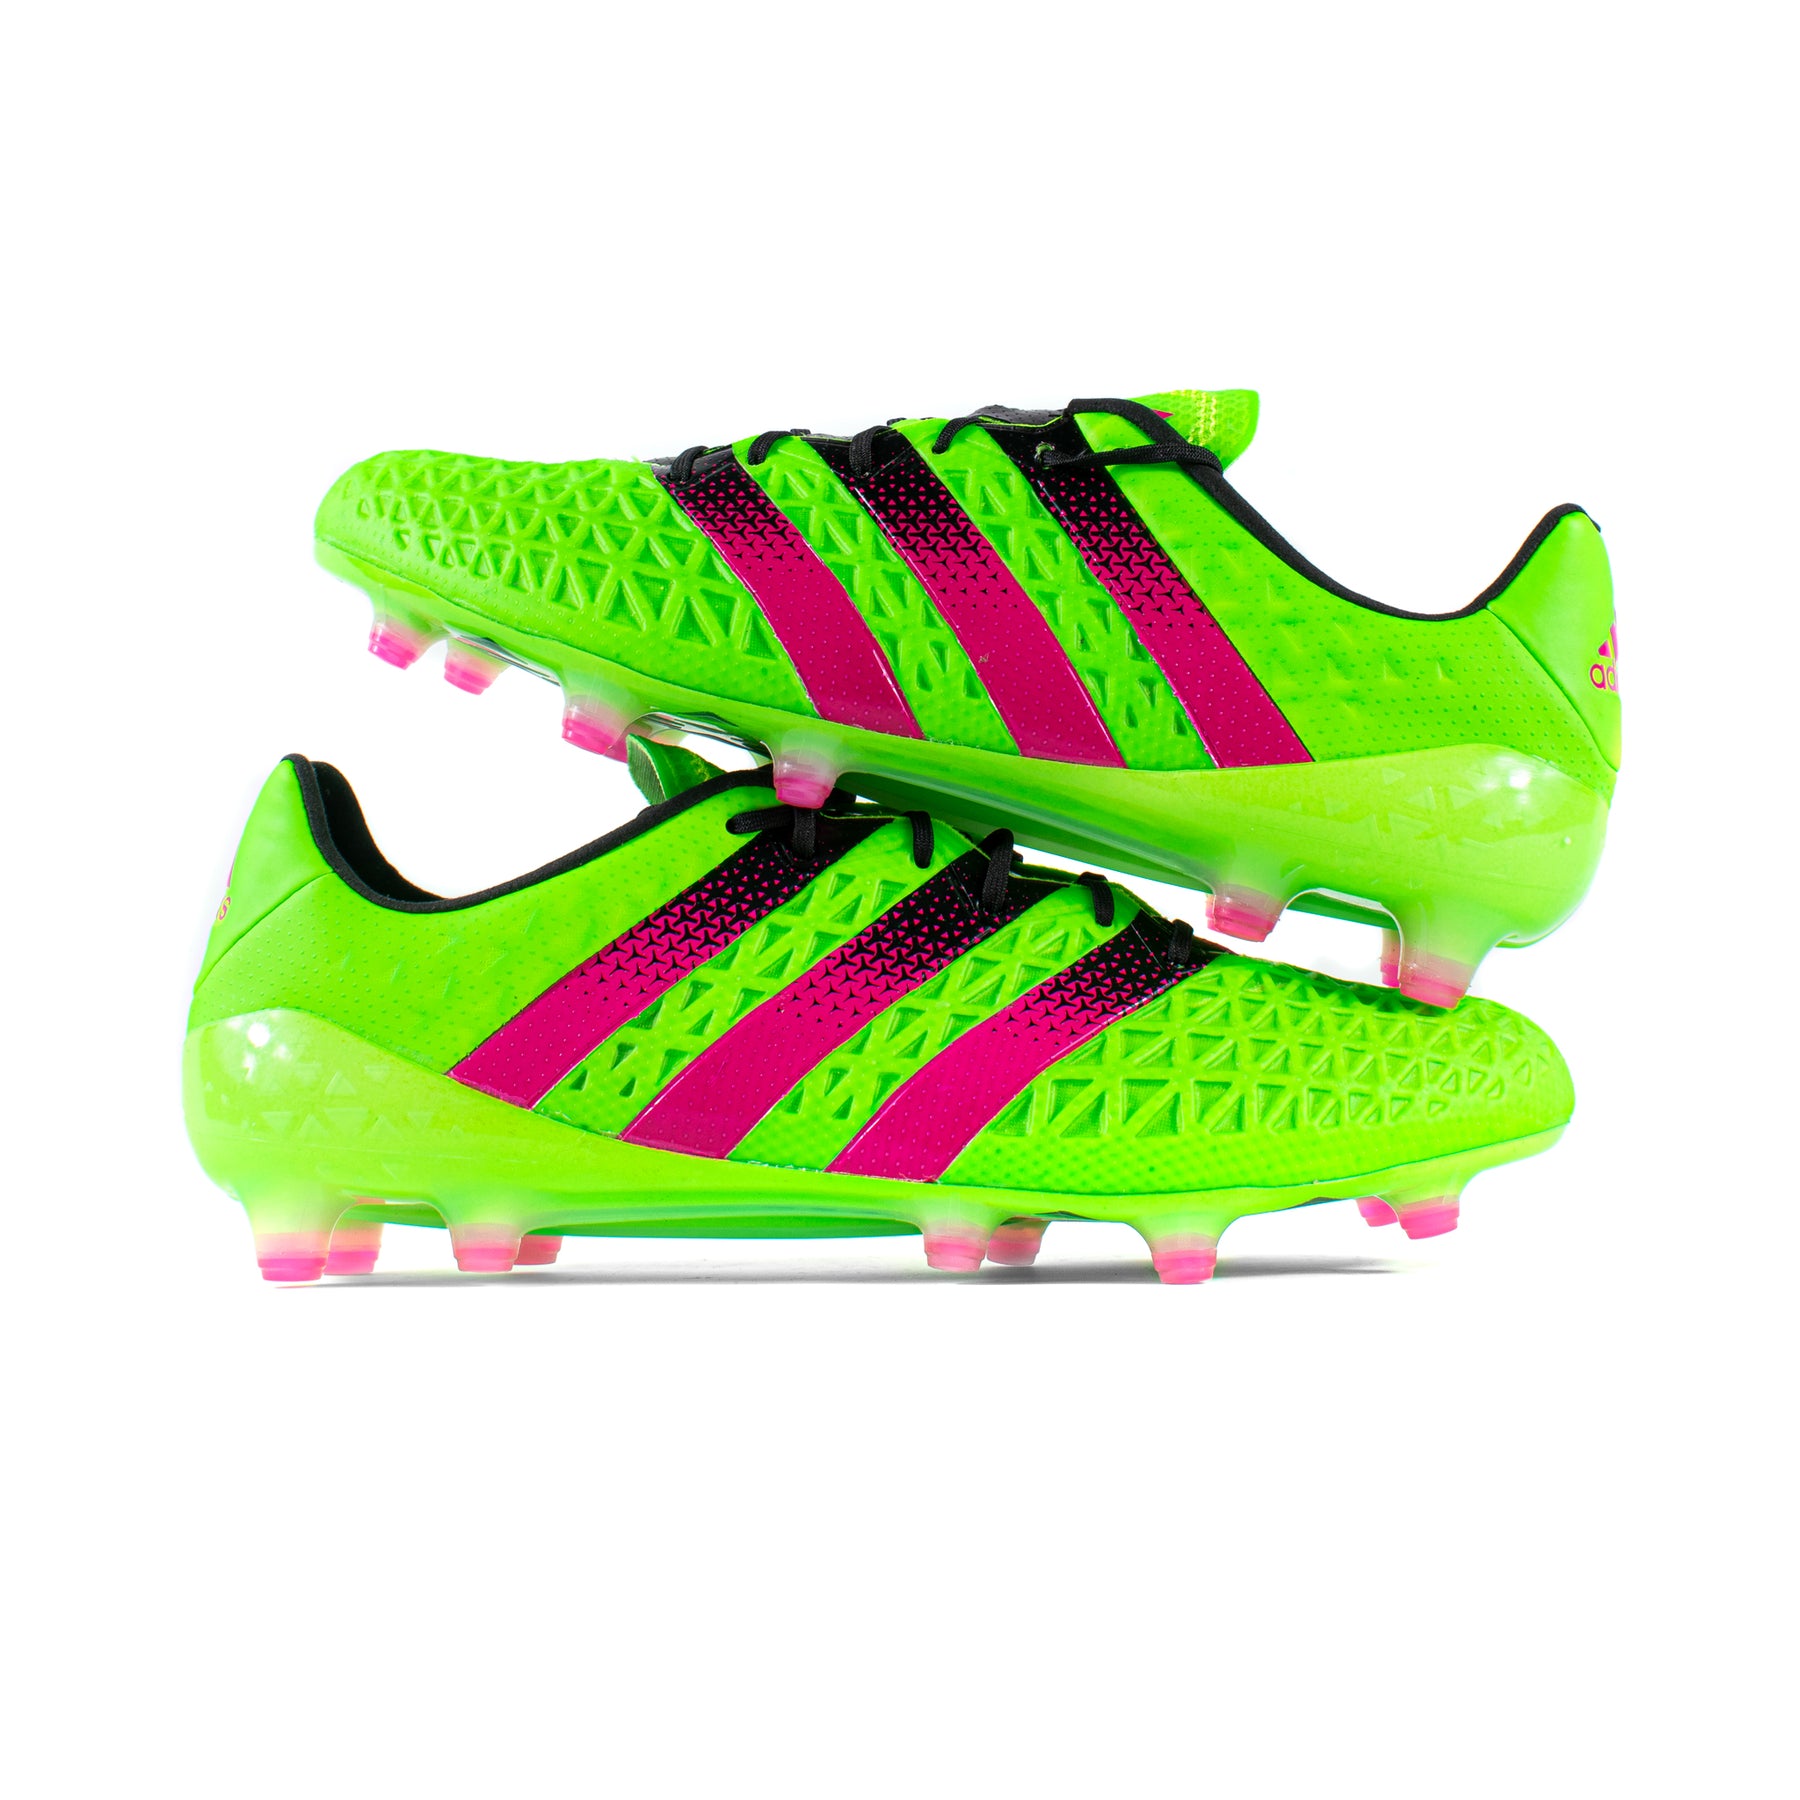 víctima canto riñones Adidas Ace 16.1 Green FG – Classic Soccer Cleats